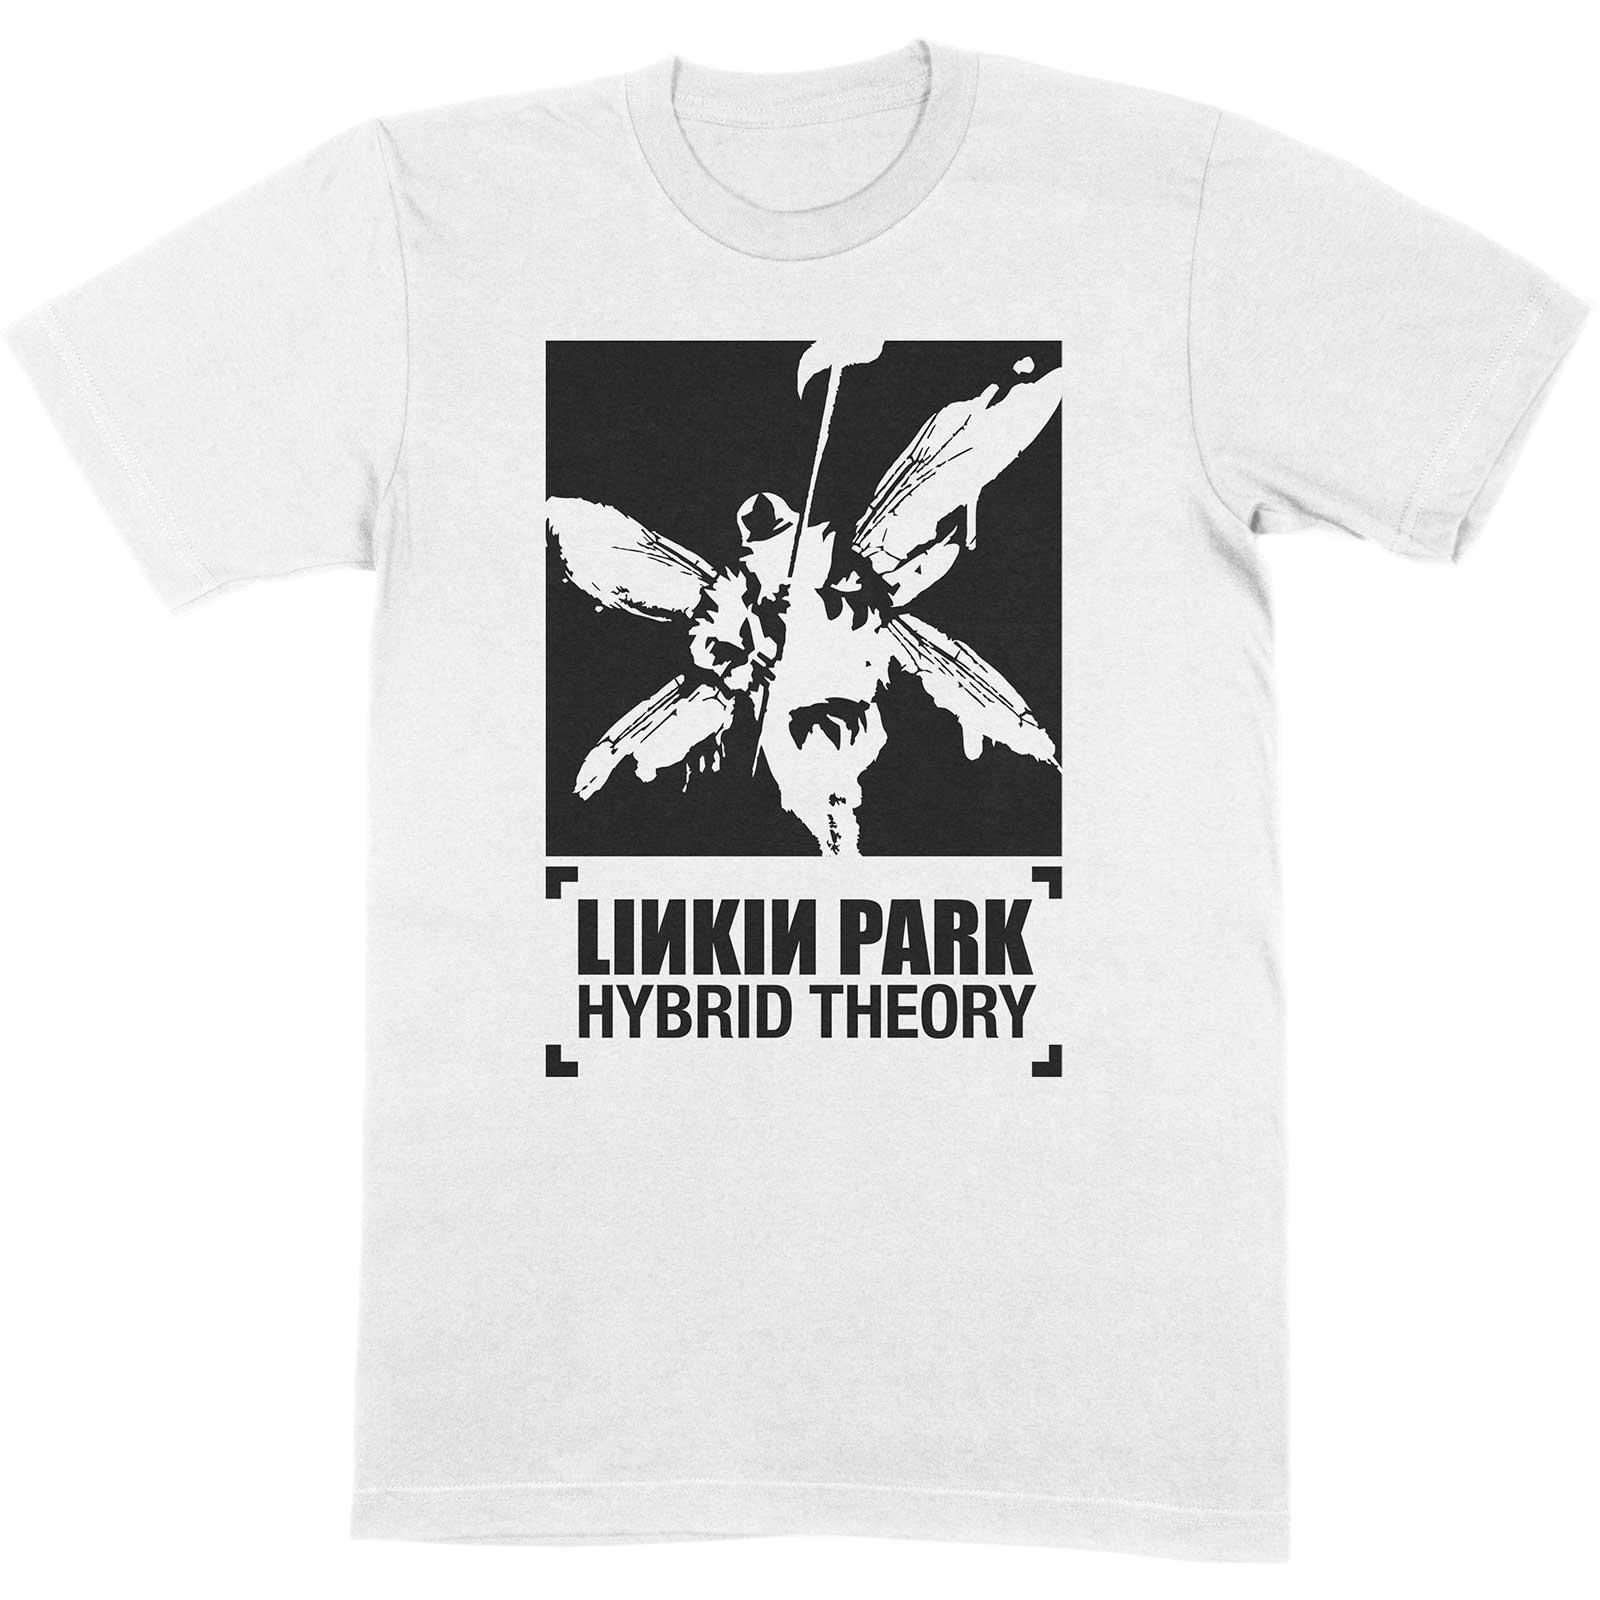 Linkin Park Unisex Adult Soldier Hybrid Theory Cotton T-Shirt (White) (XL)